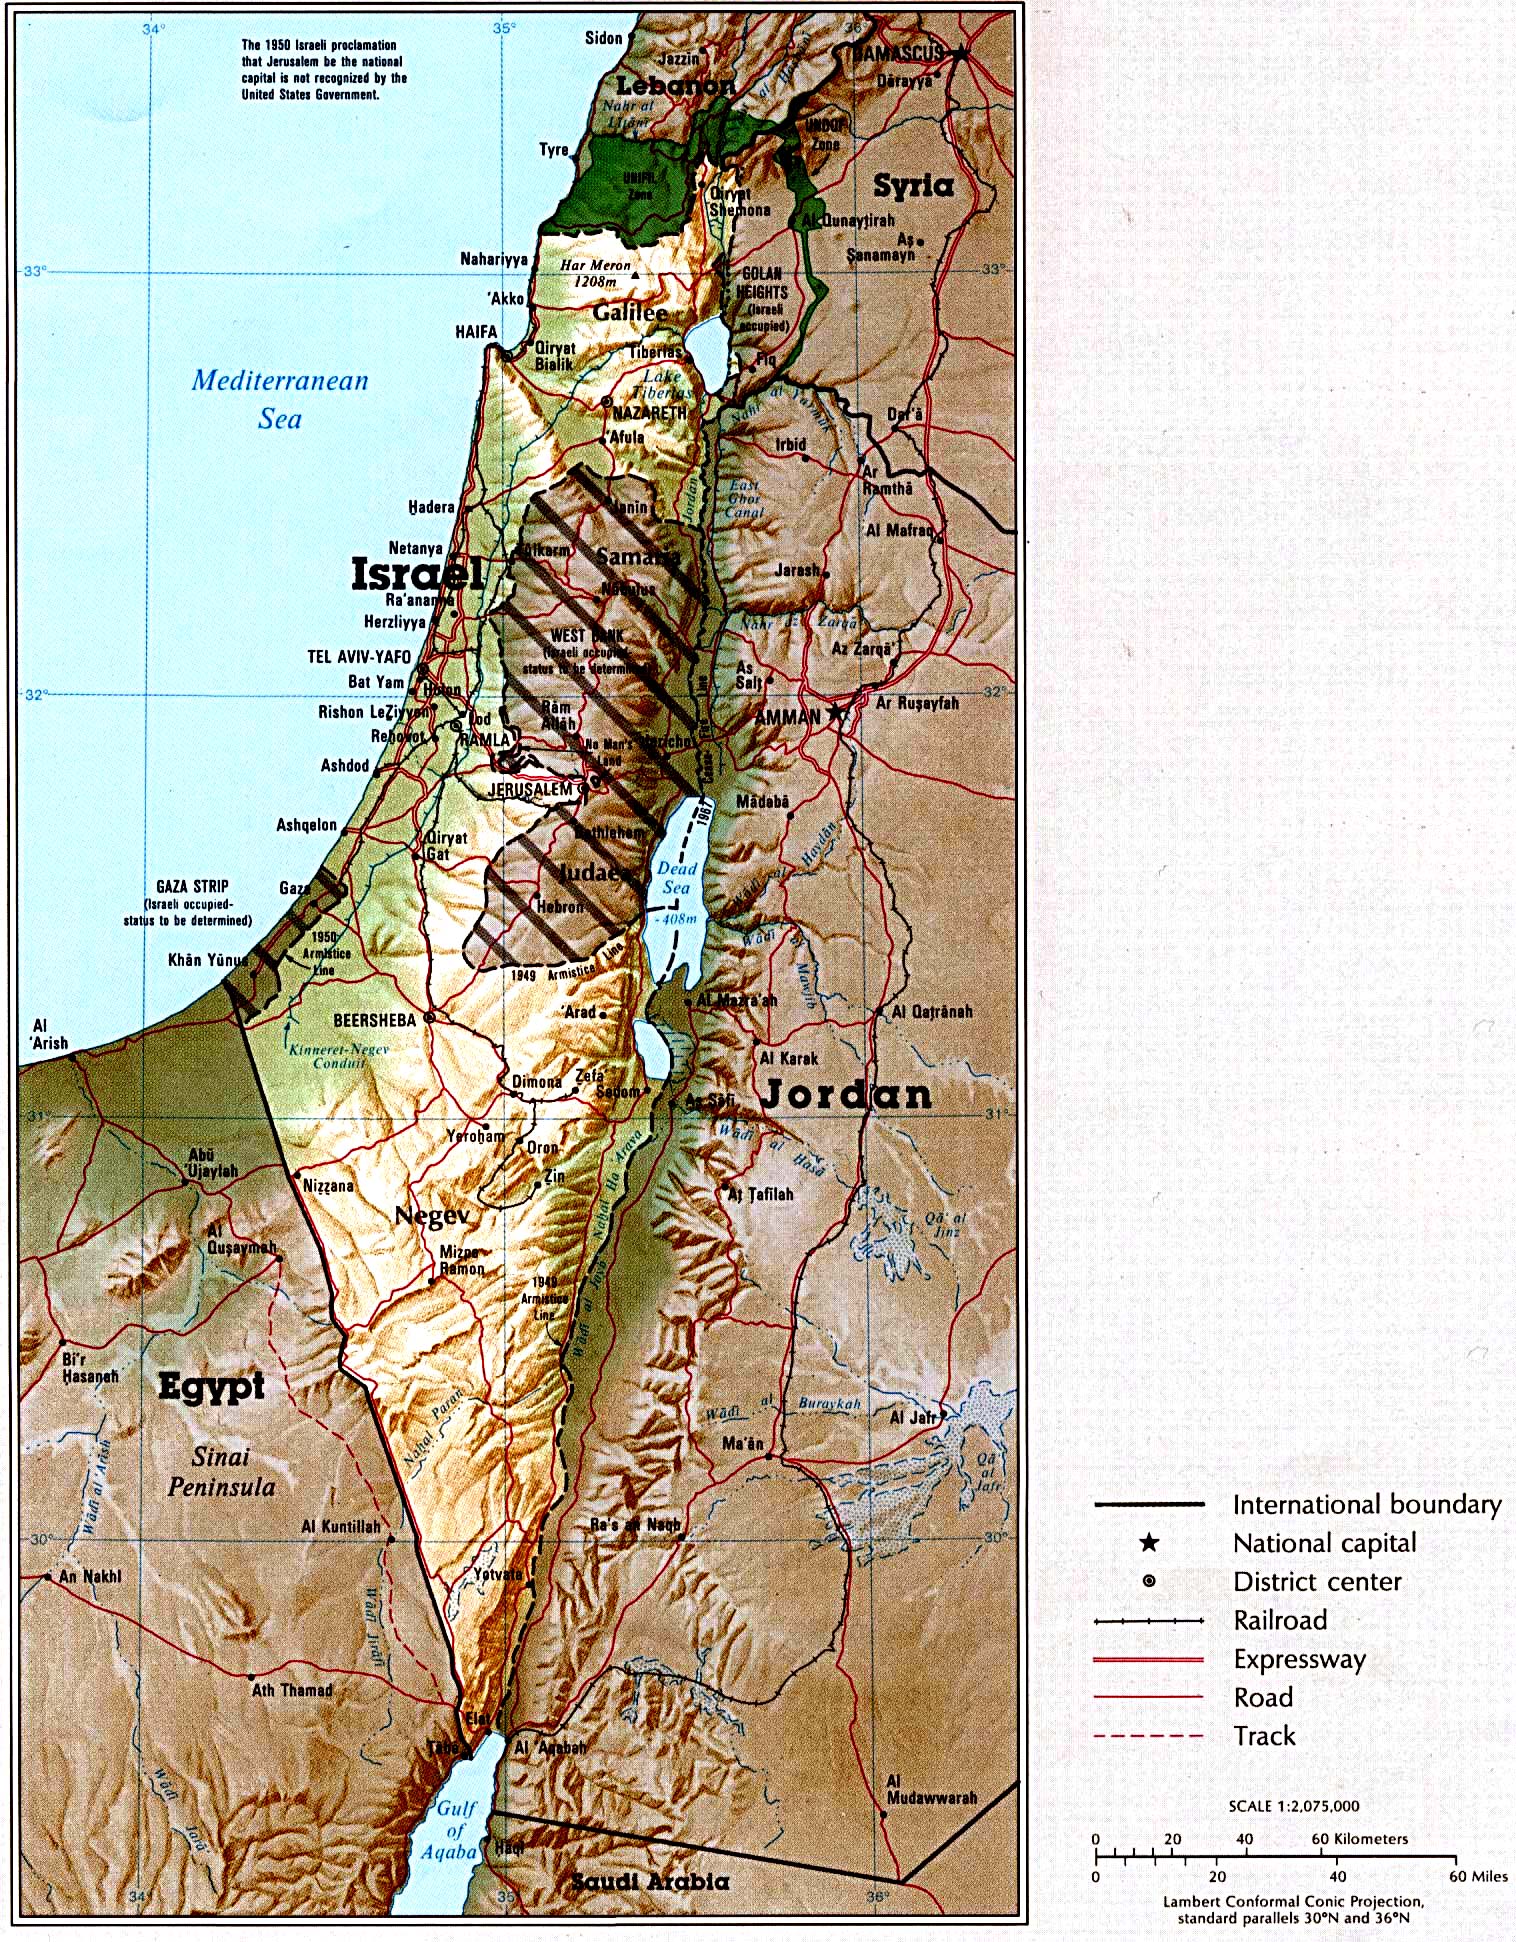 Israel Map 2008